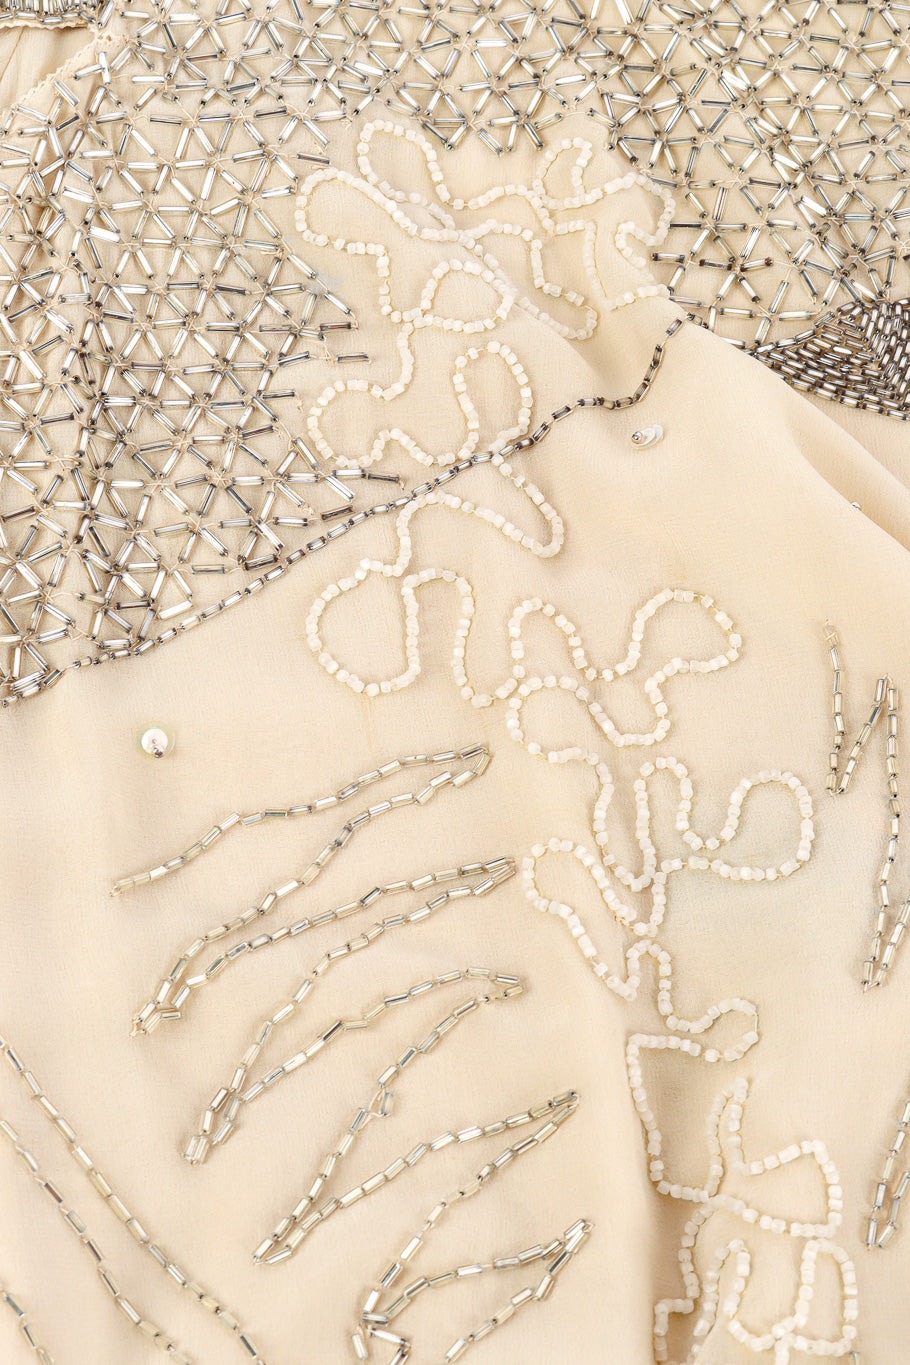 Embellished silk dress by Fabrice flat lay beading close @recessla